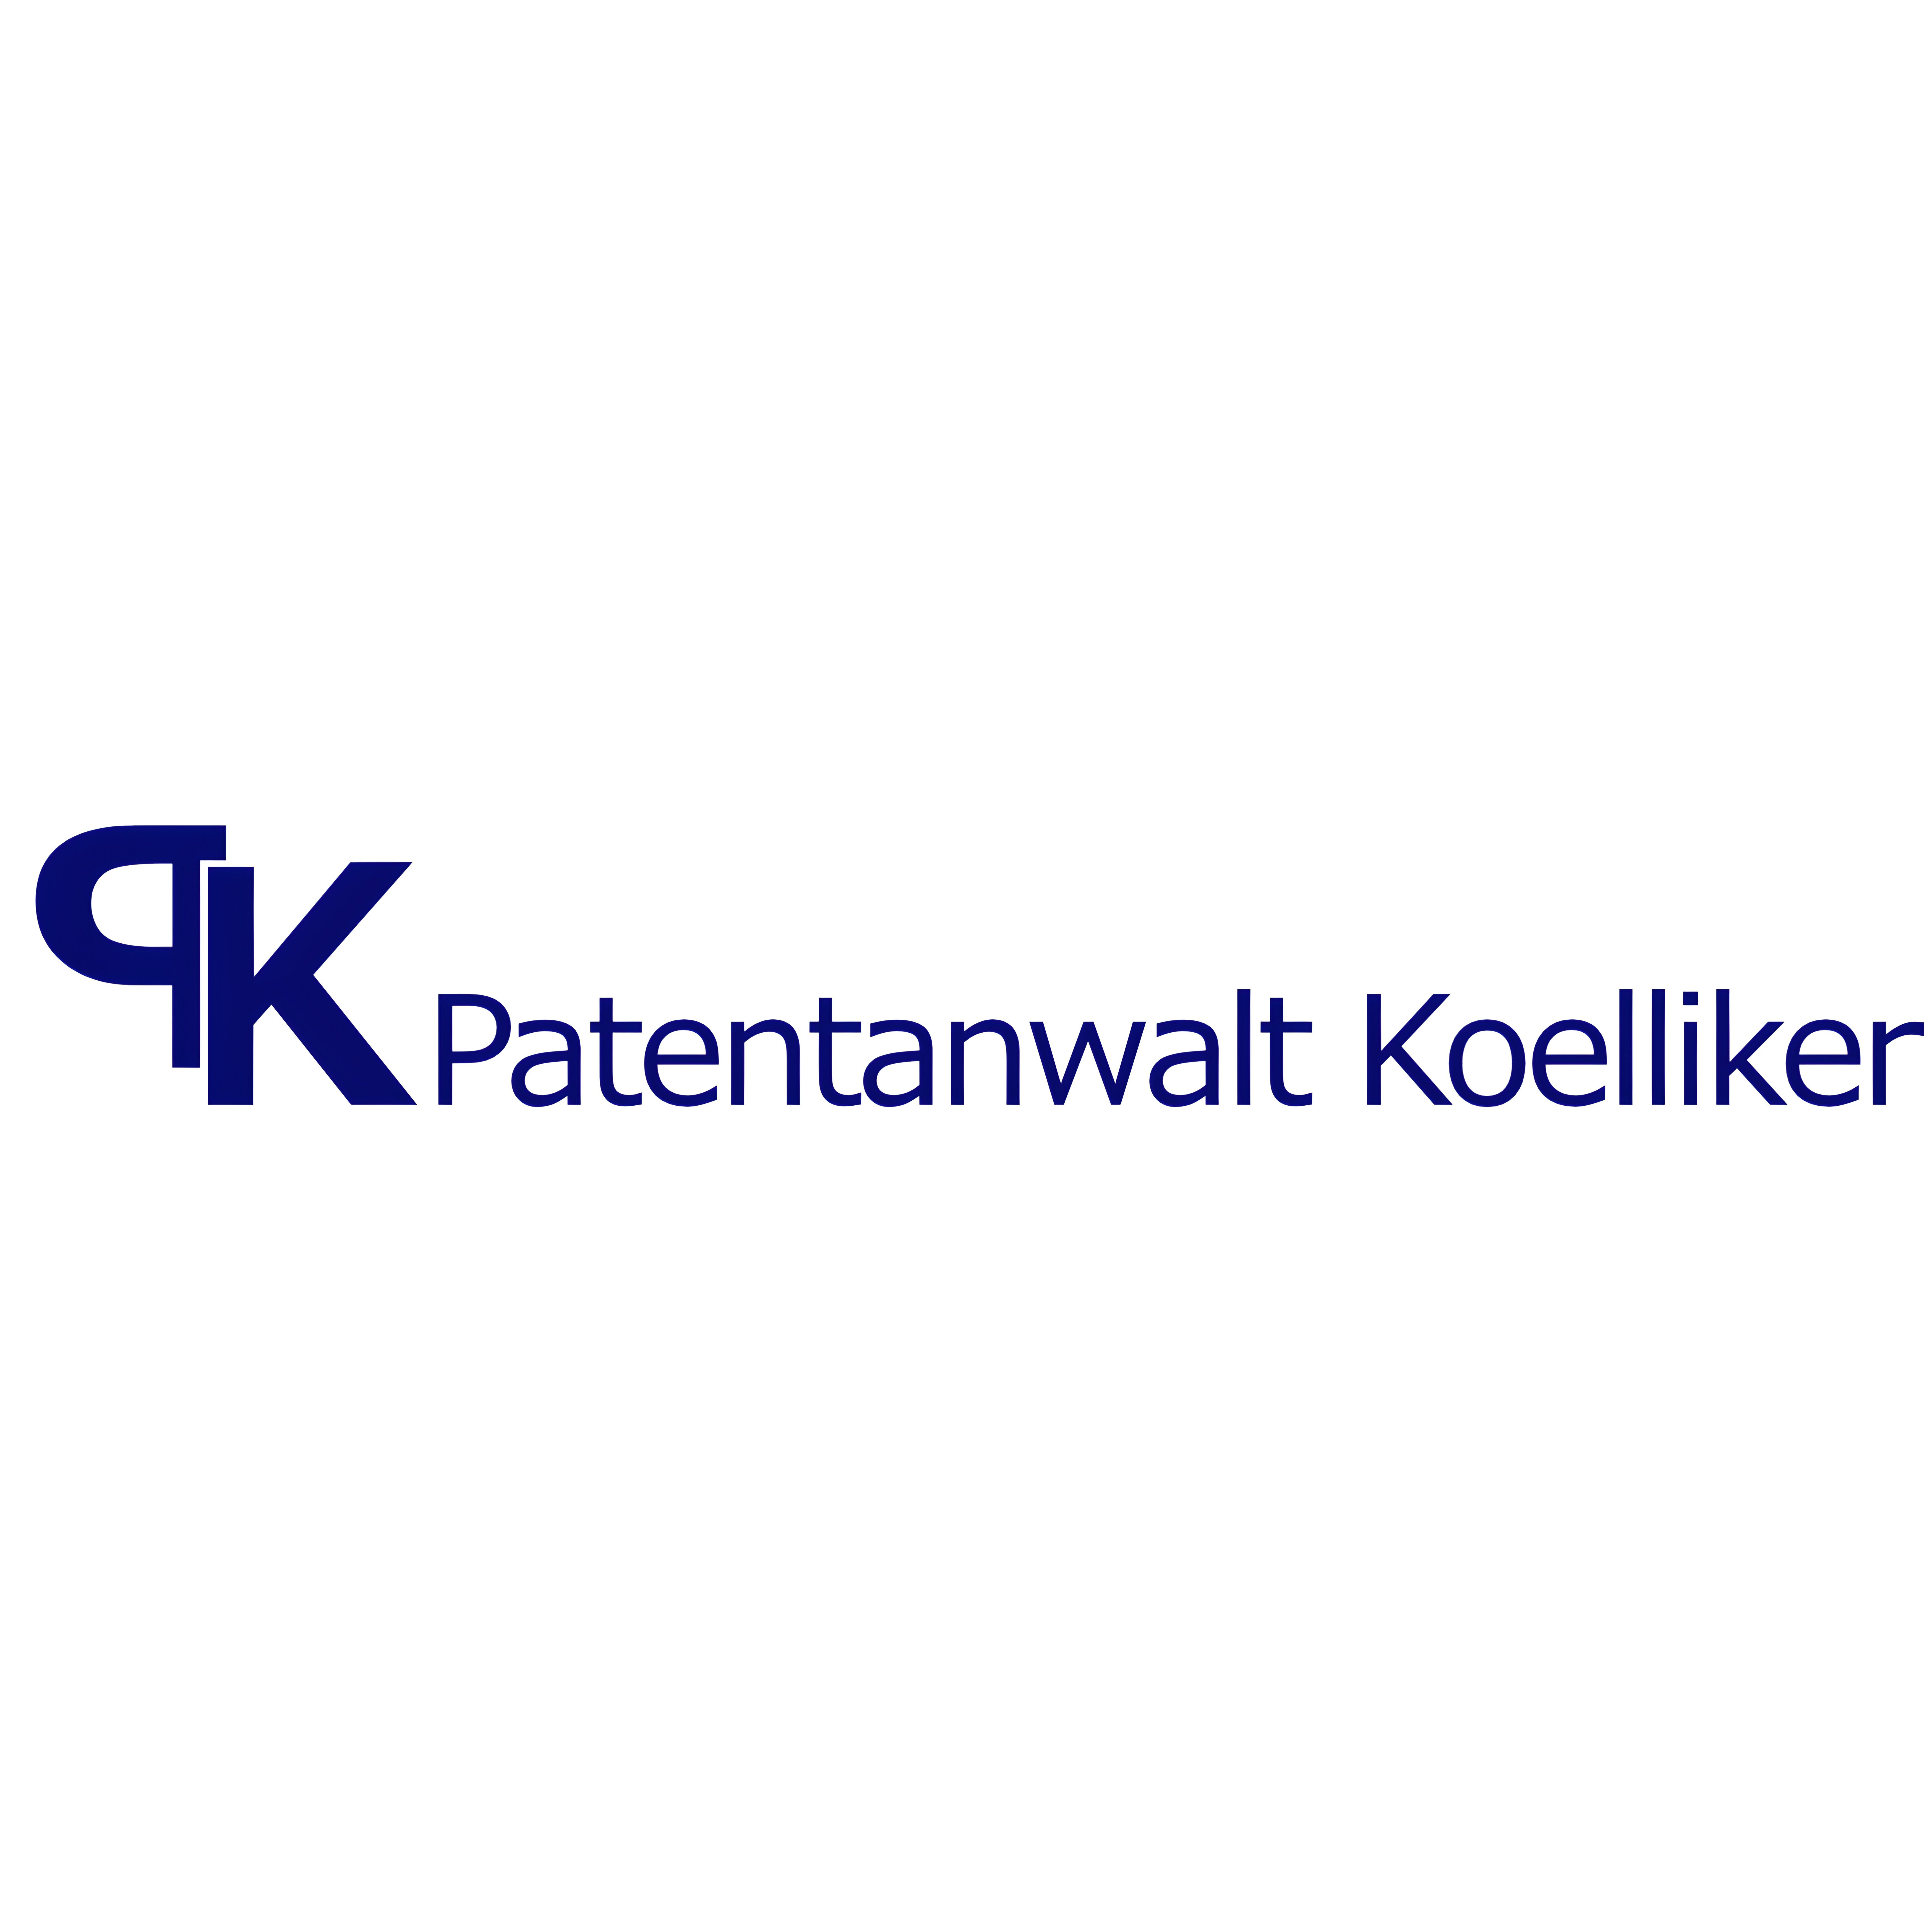 Patentanwalt Koelliker GmbH Logo